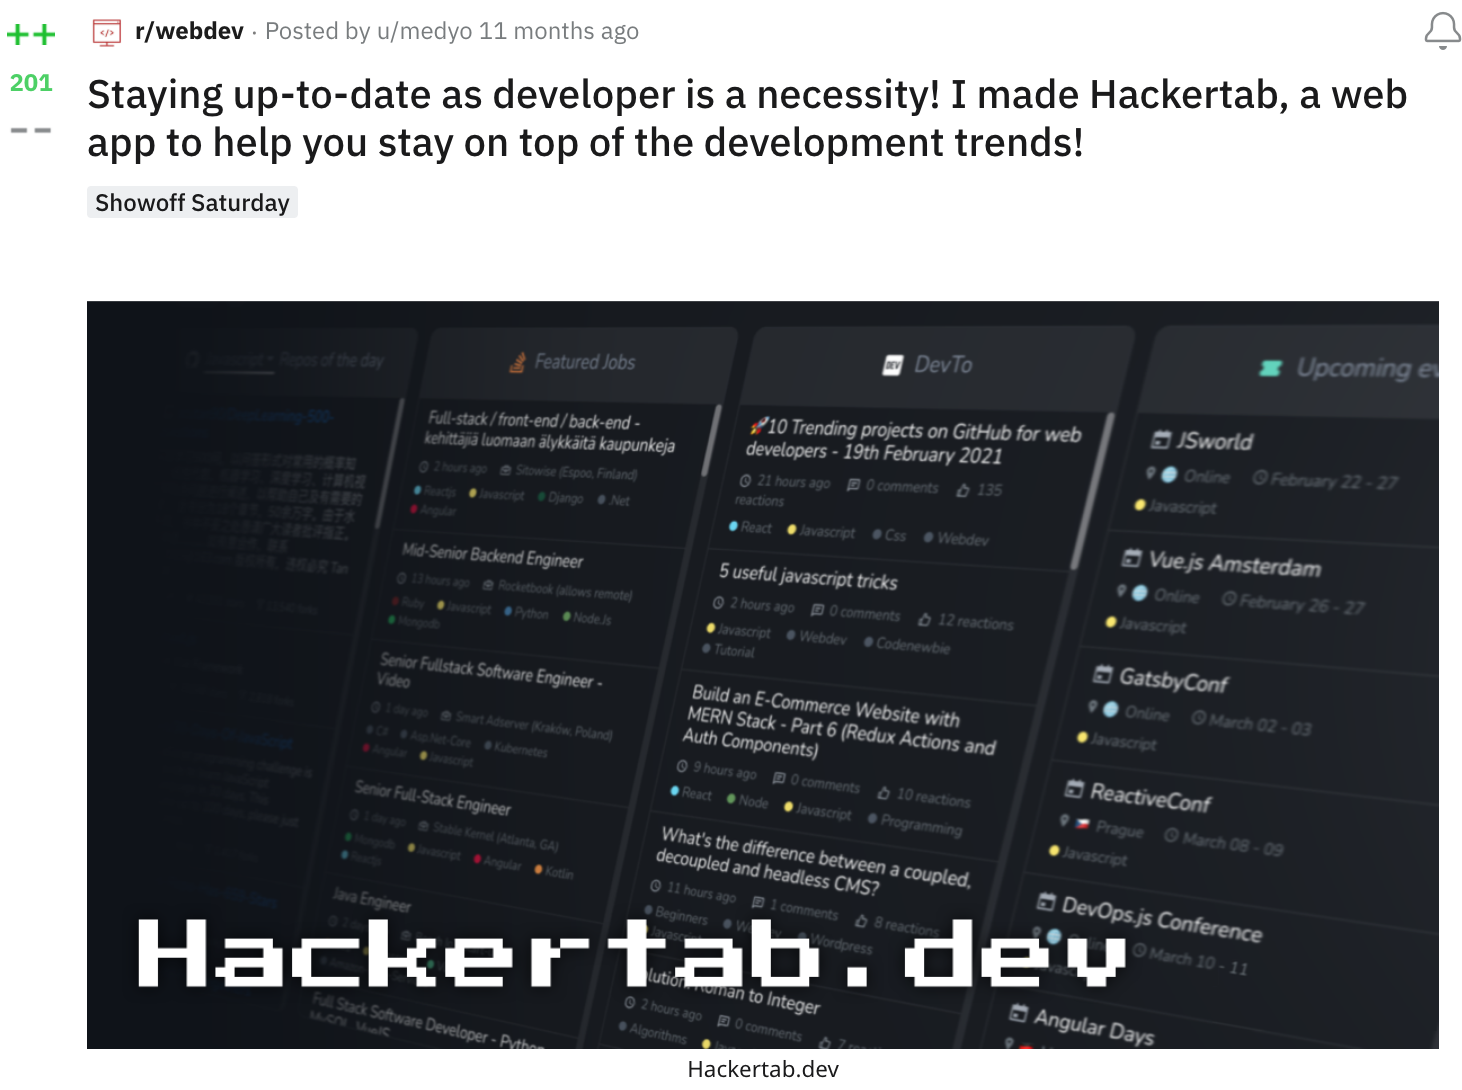 Hackertab Thread on Reddit